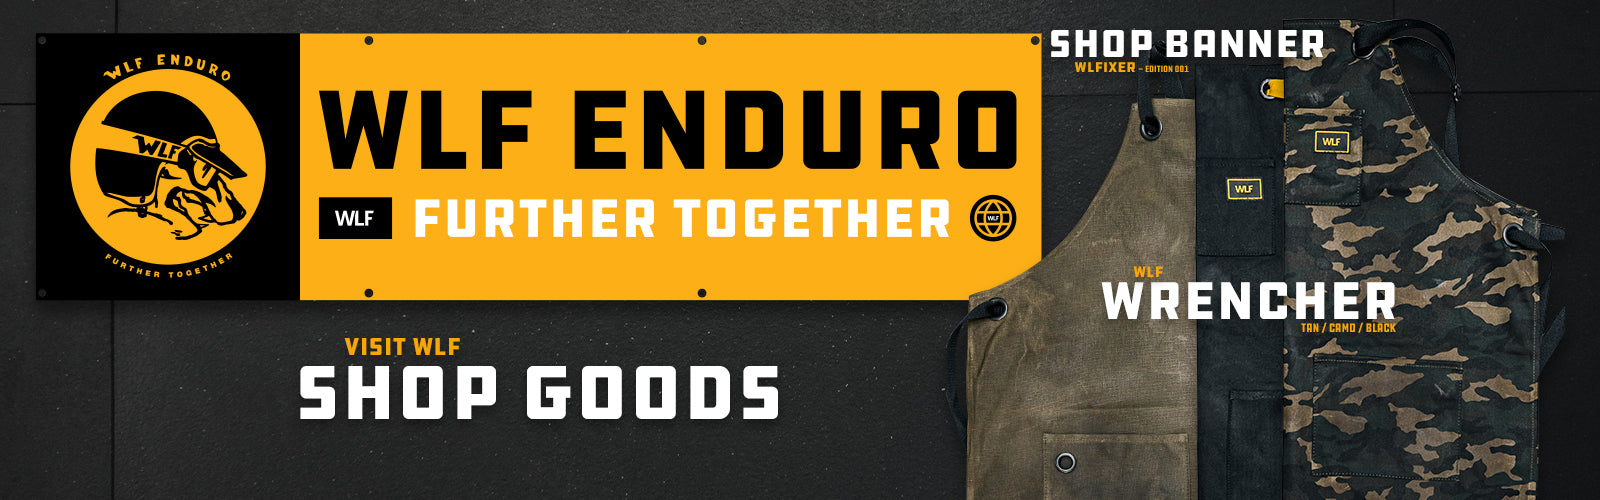 Personaliza tu ropa de Enduro / Motocross - WolfPro Racing